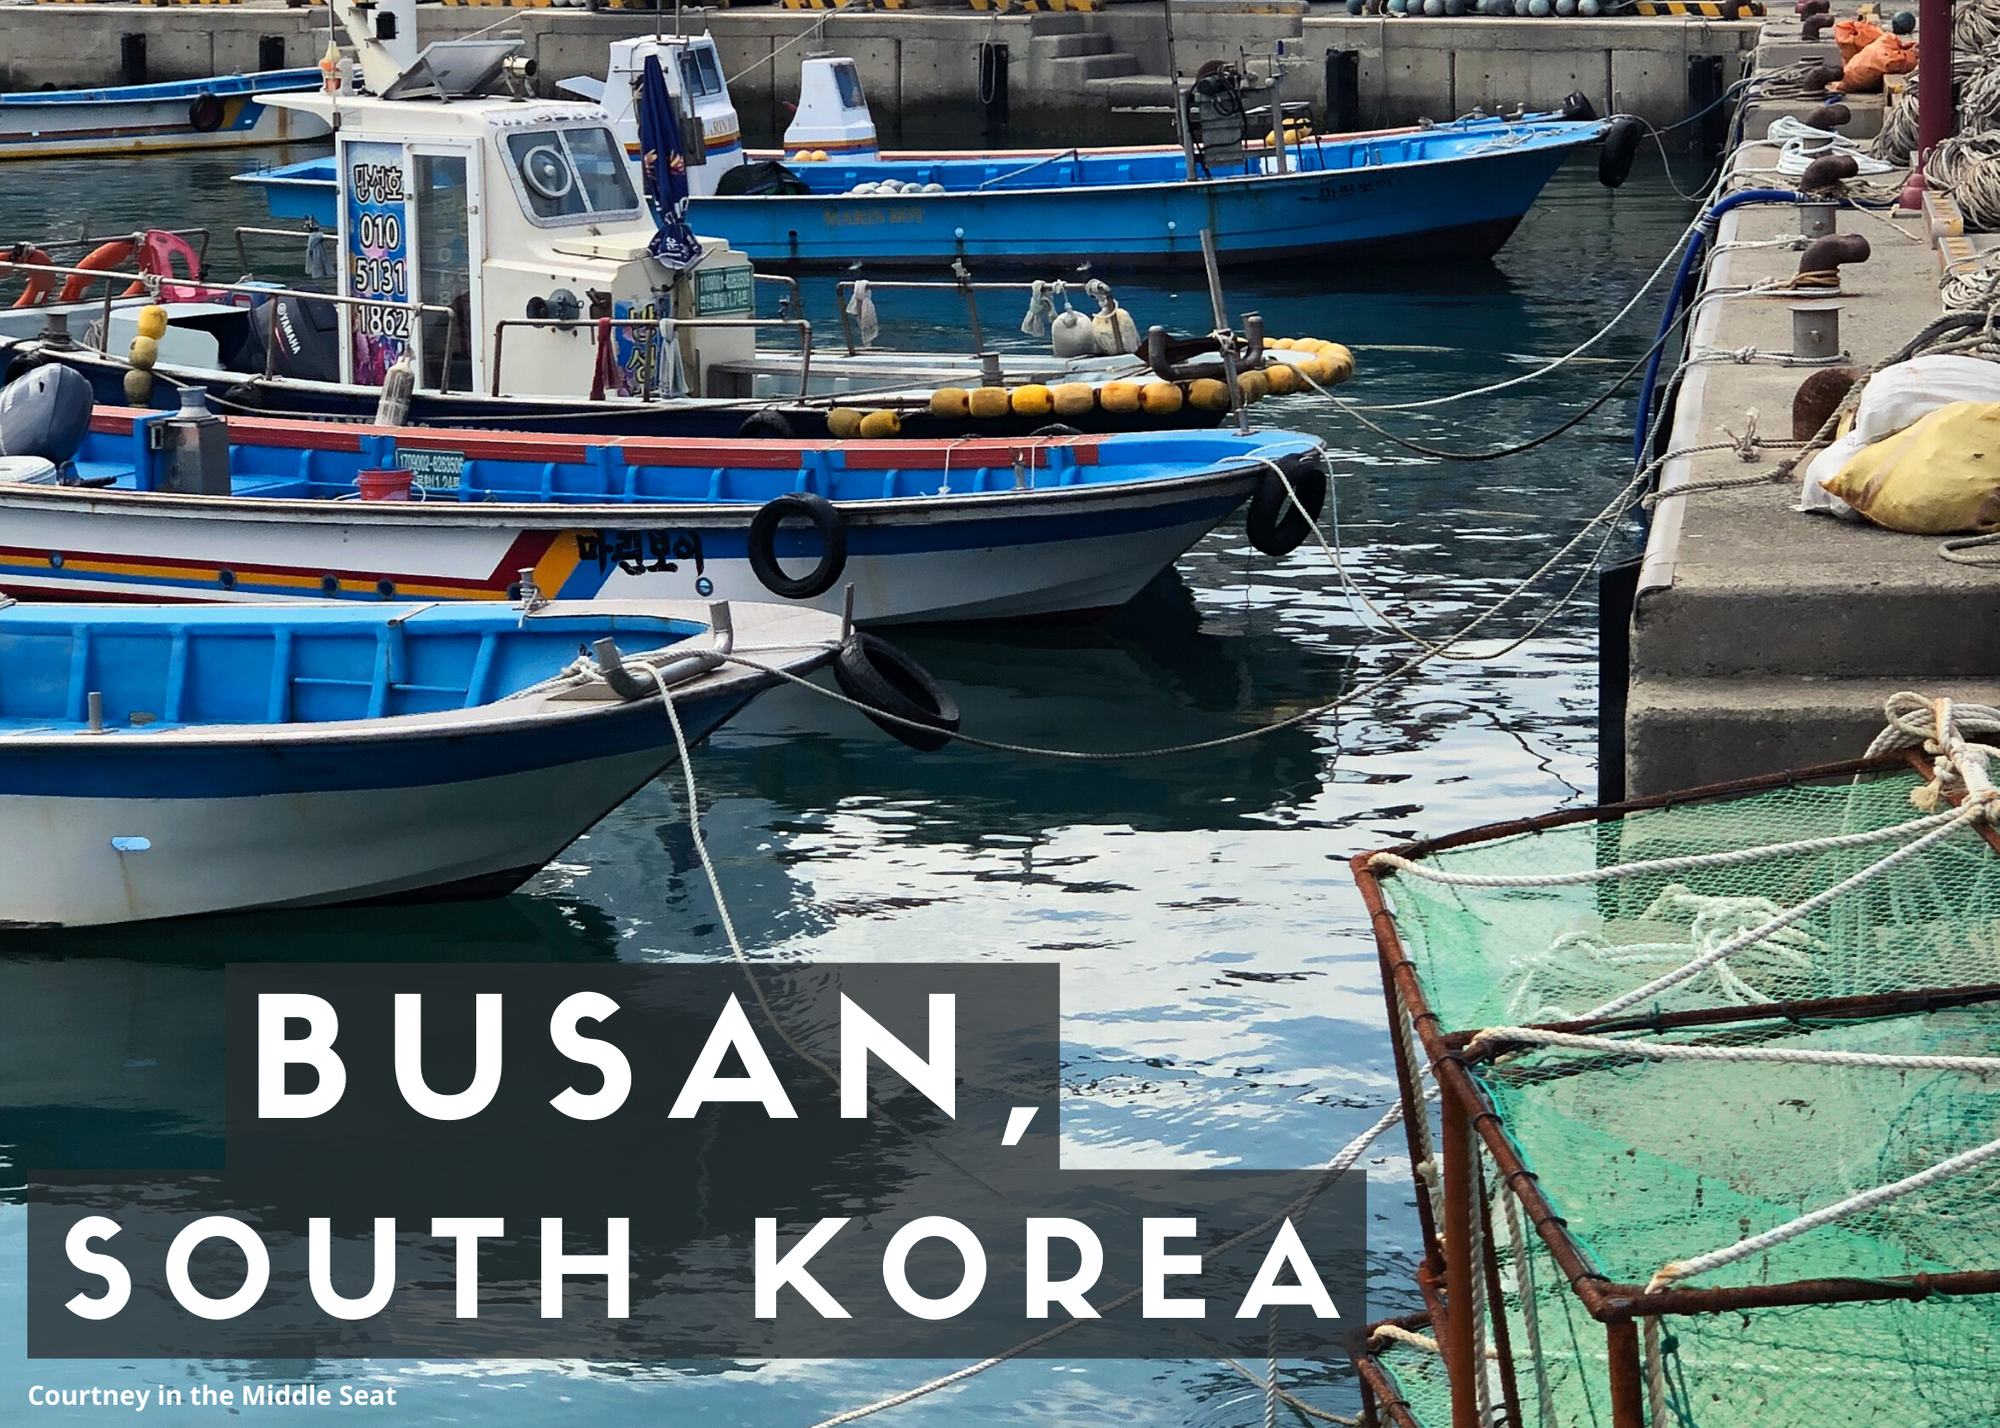 Guide to Busan South Korea - Top 5 Things to do in Busan